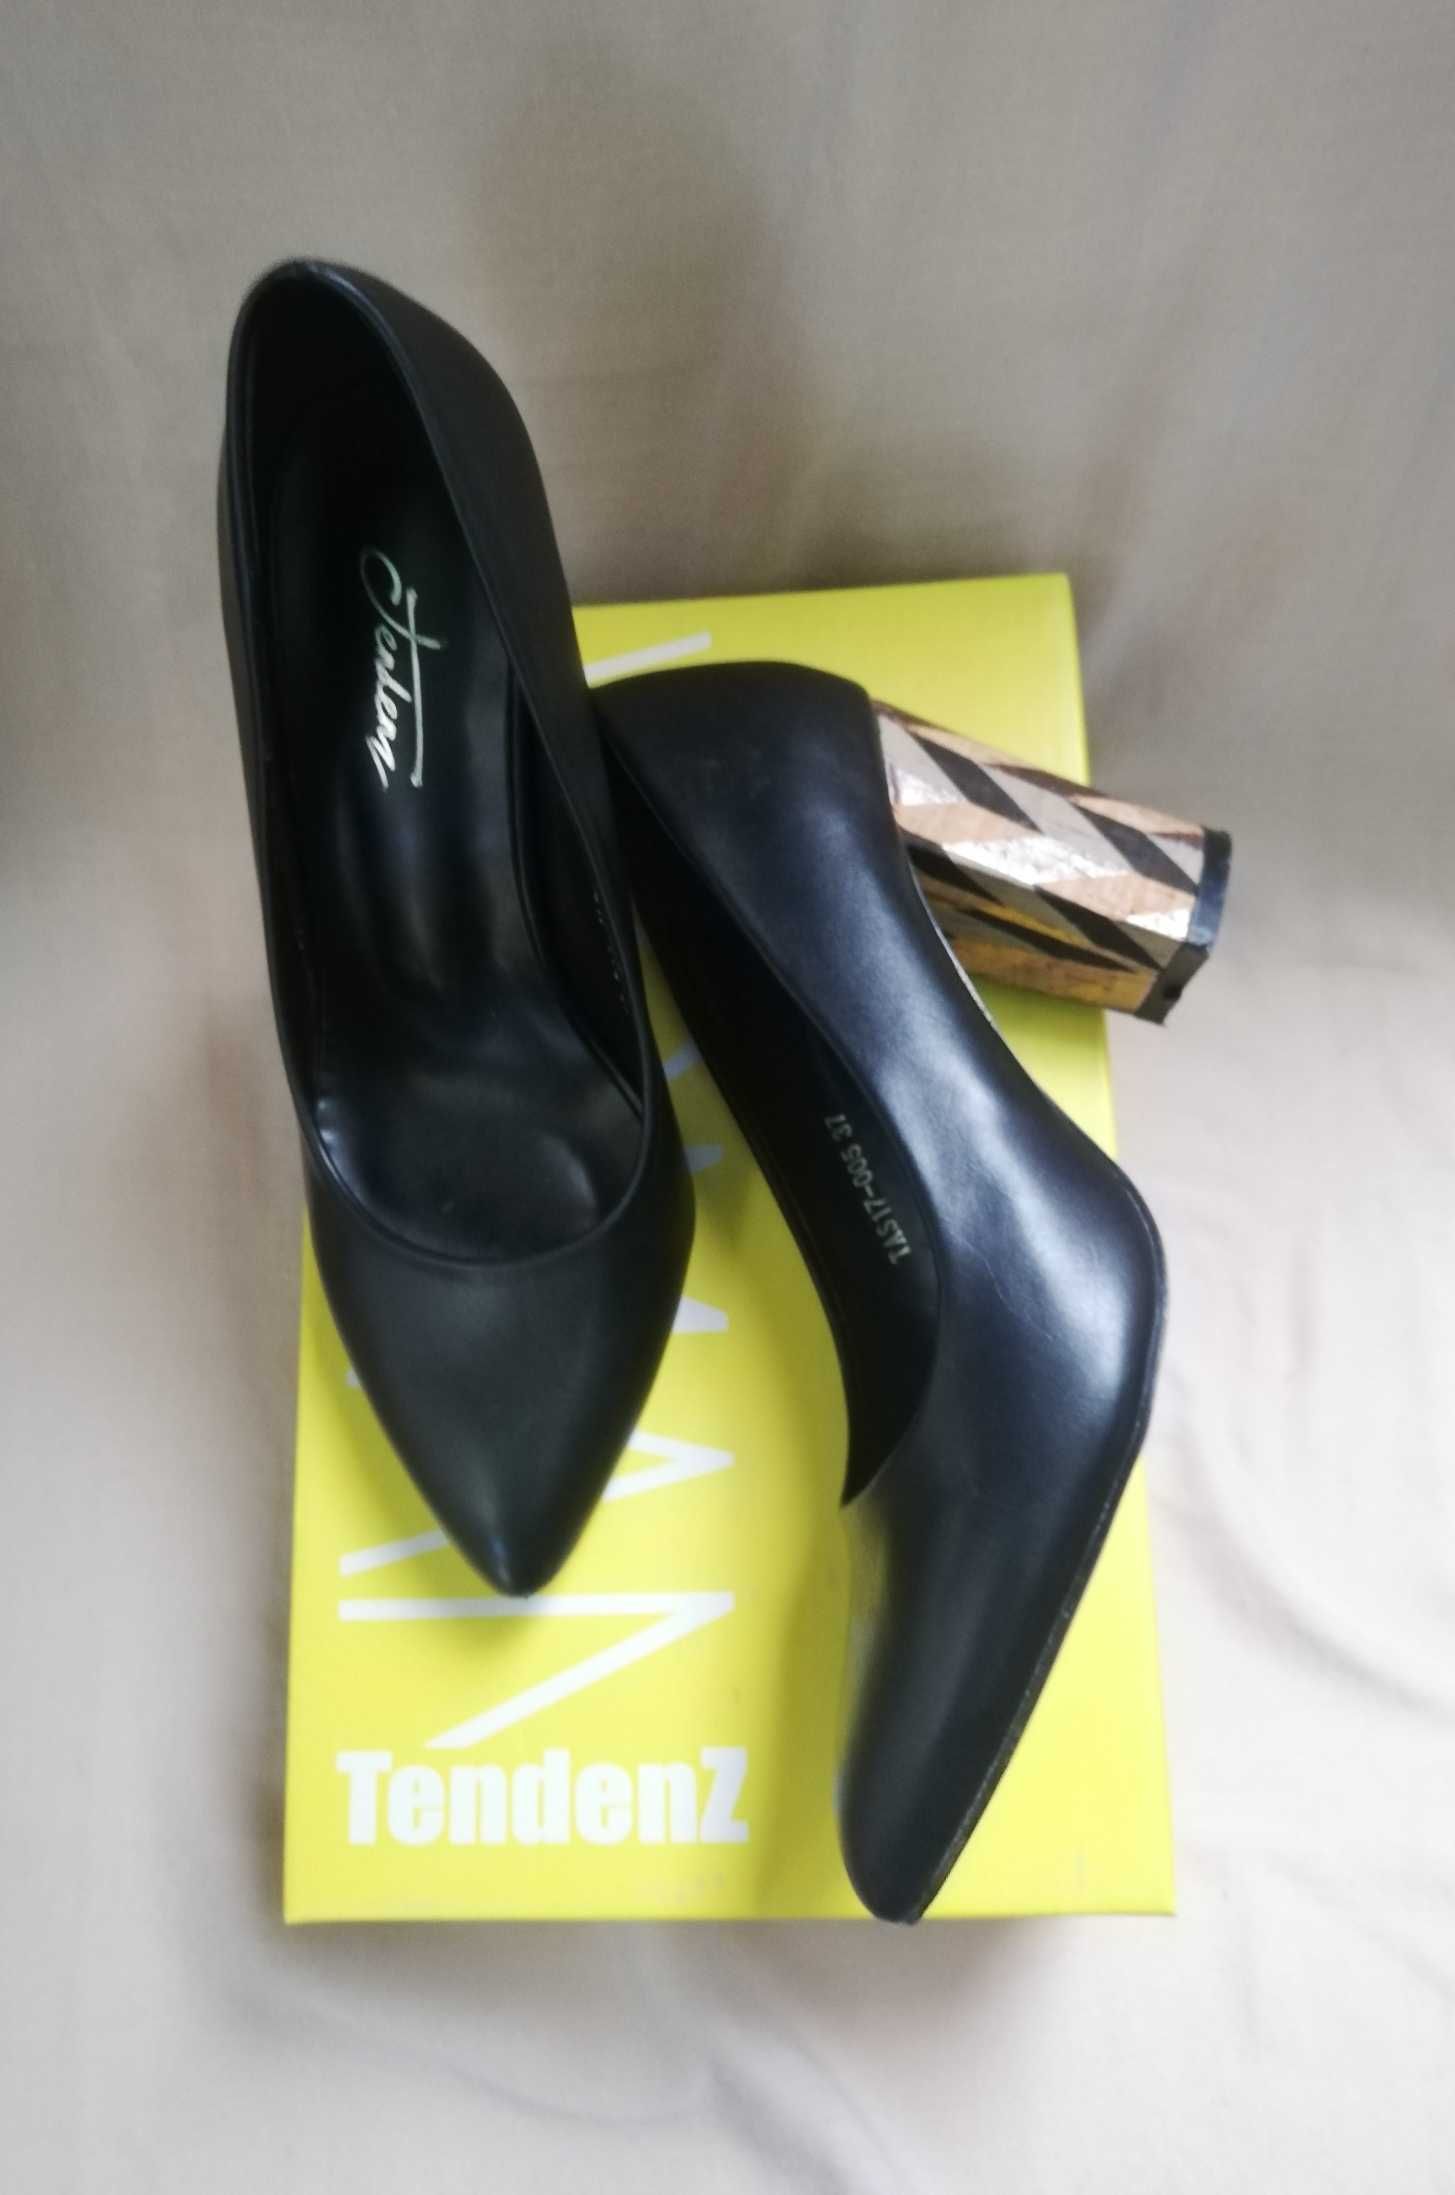 Дамски обувки Tendenz- черни, токът е с различни нюанси на златисто